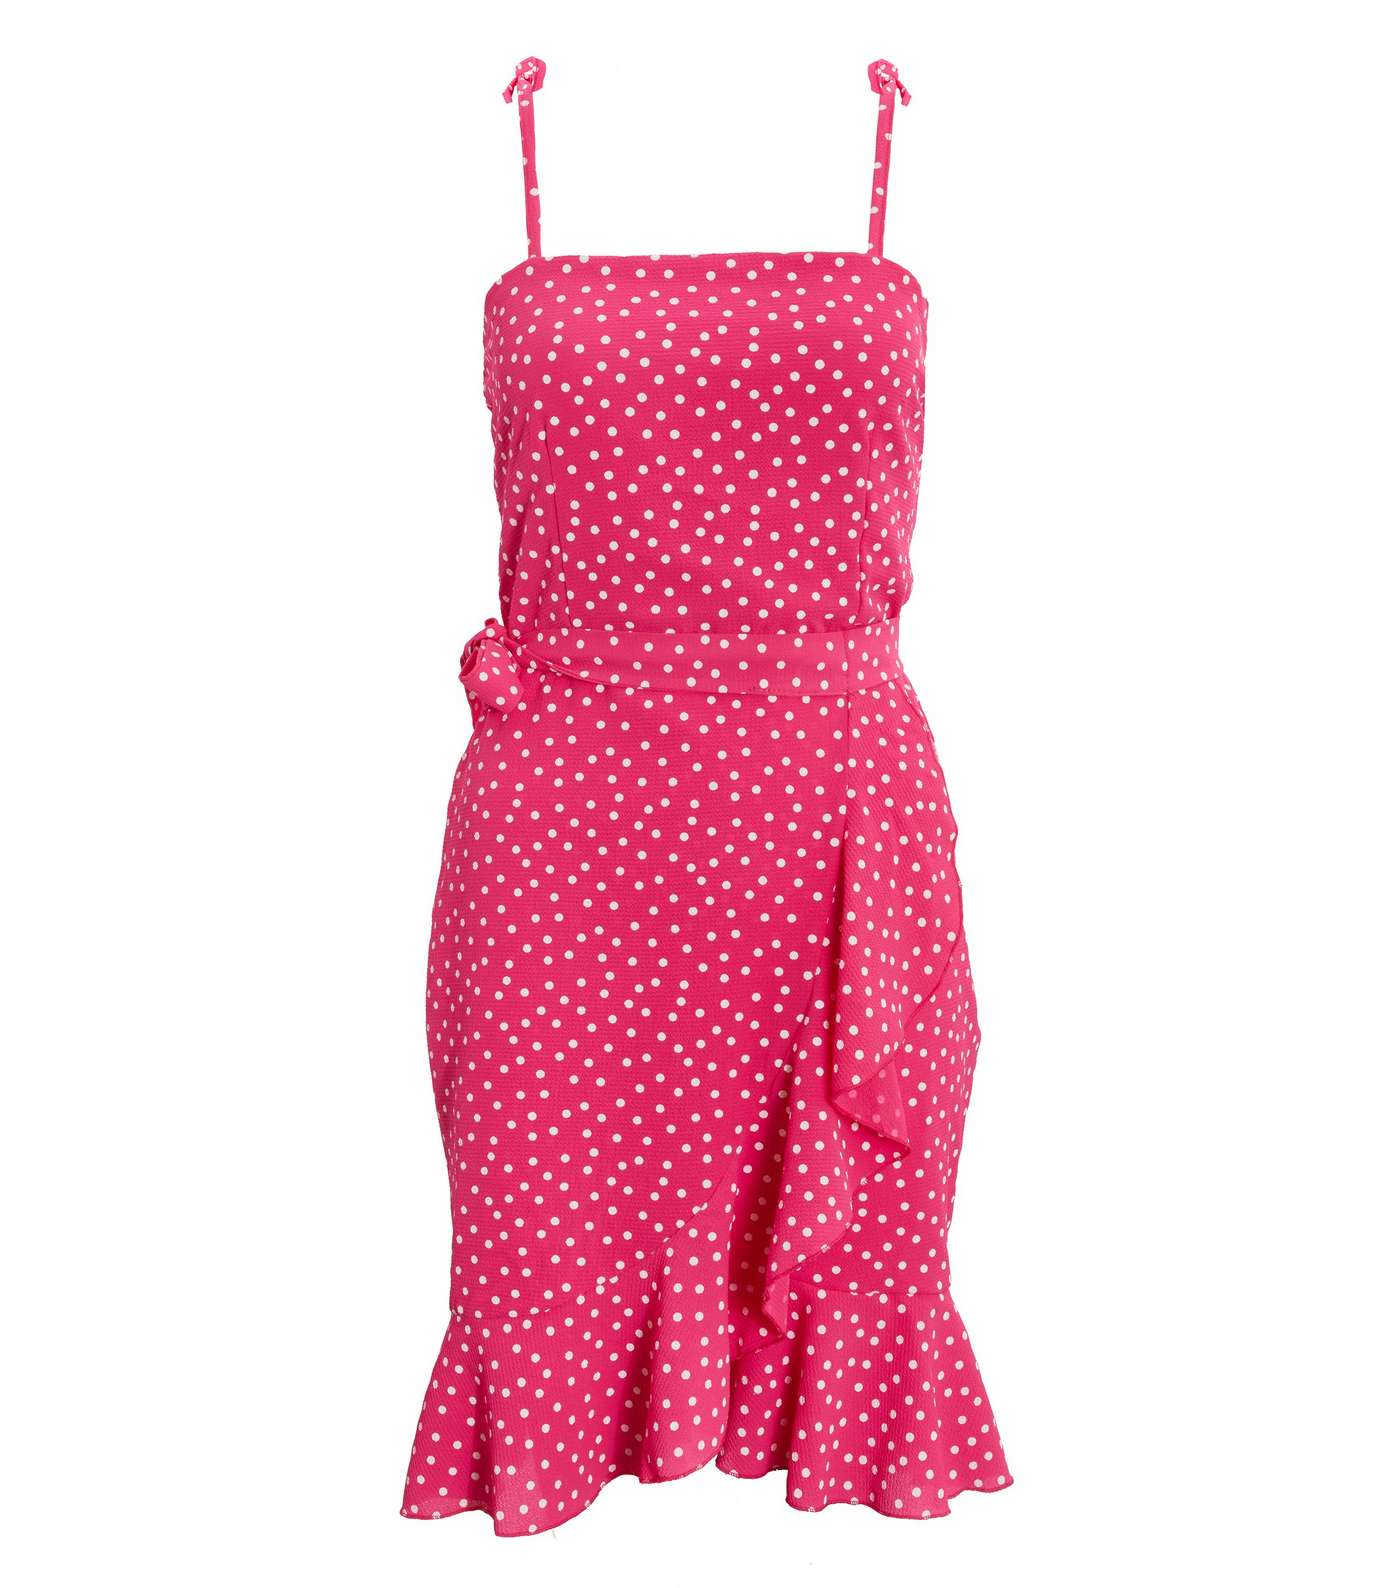 QUIZ Bright Pink Polka Dot Ruffle Mini Dress Image 4